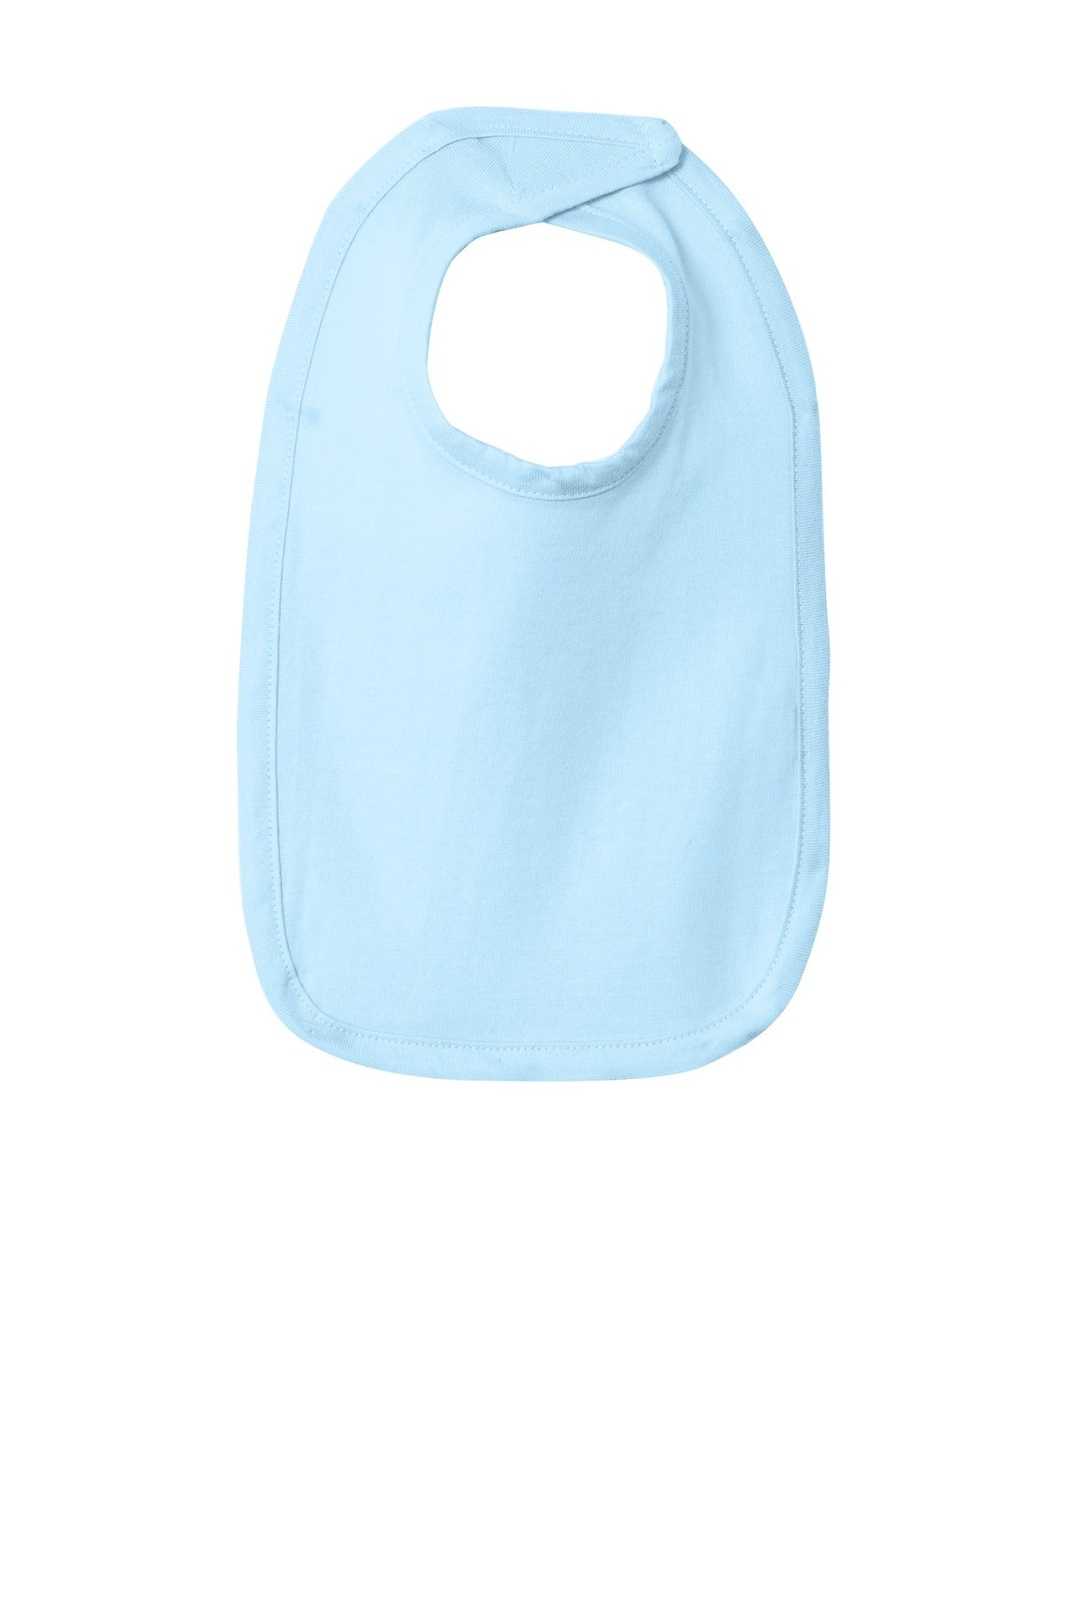 Rabbit Skins 1005 Infant Premium Jersey Bib - Light Blue - HIT a Double